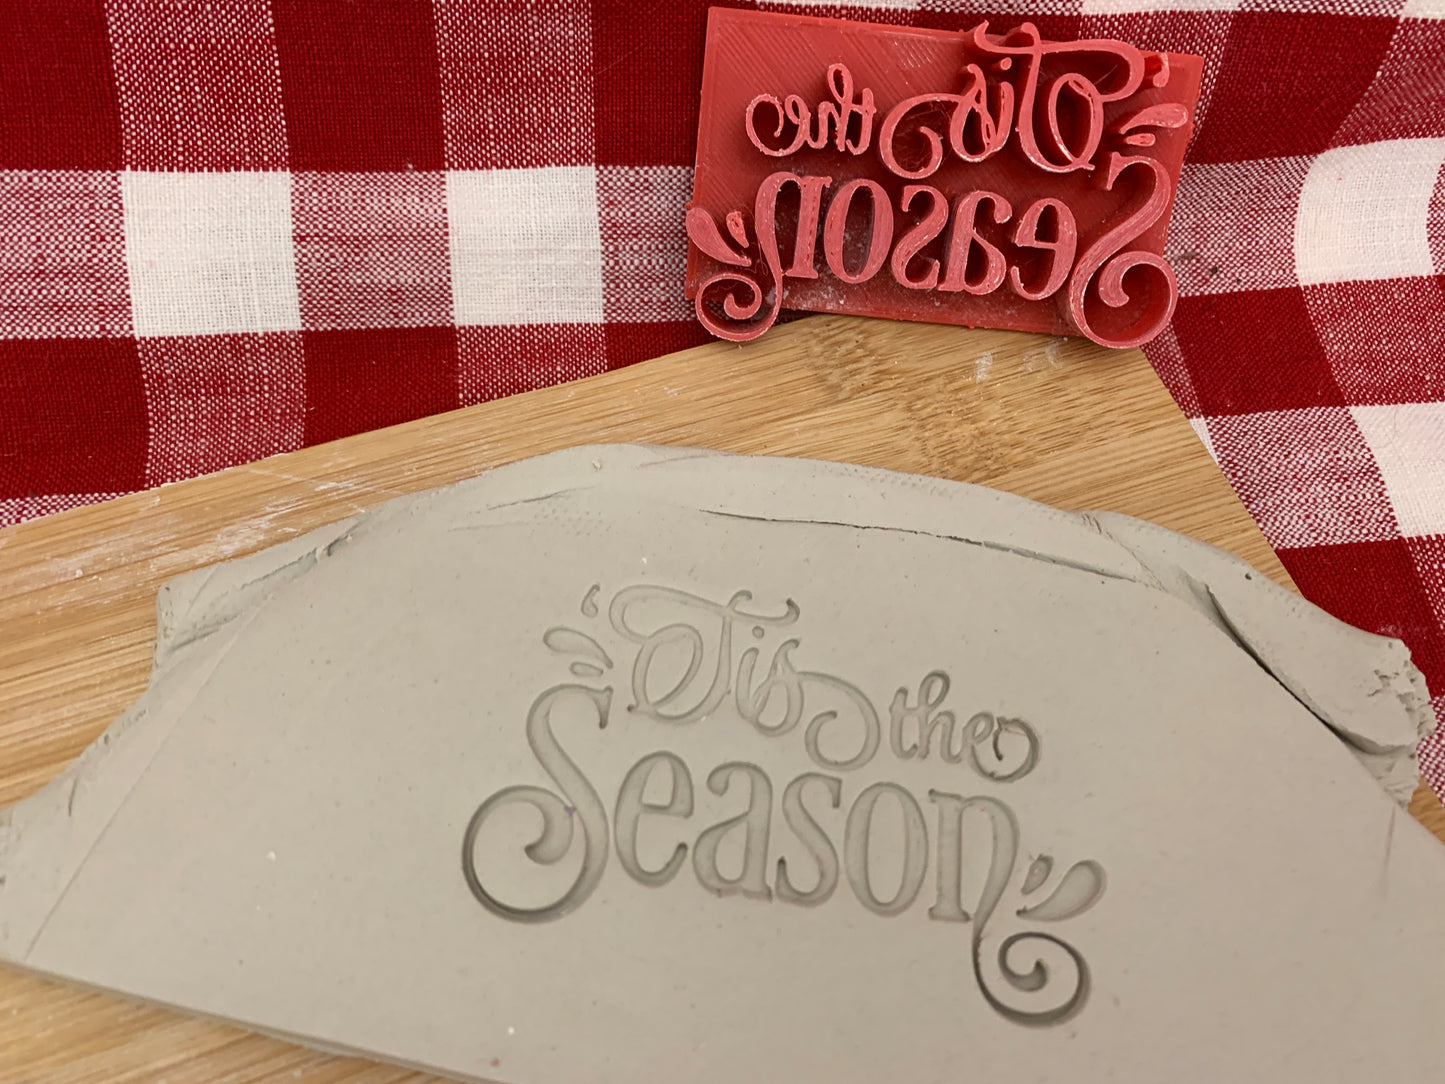 Pottery Stamp, Christmas formal "Tis the Season" saying design - multiple sizes